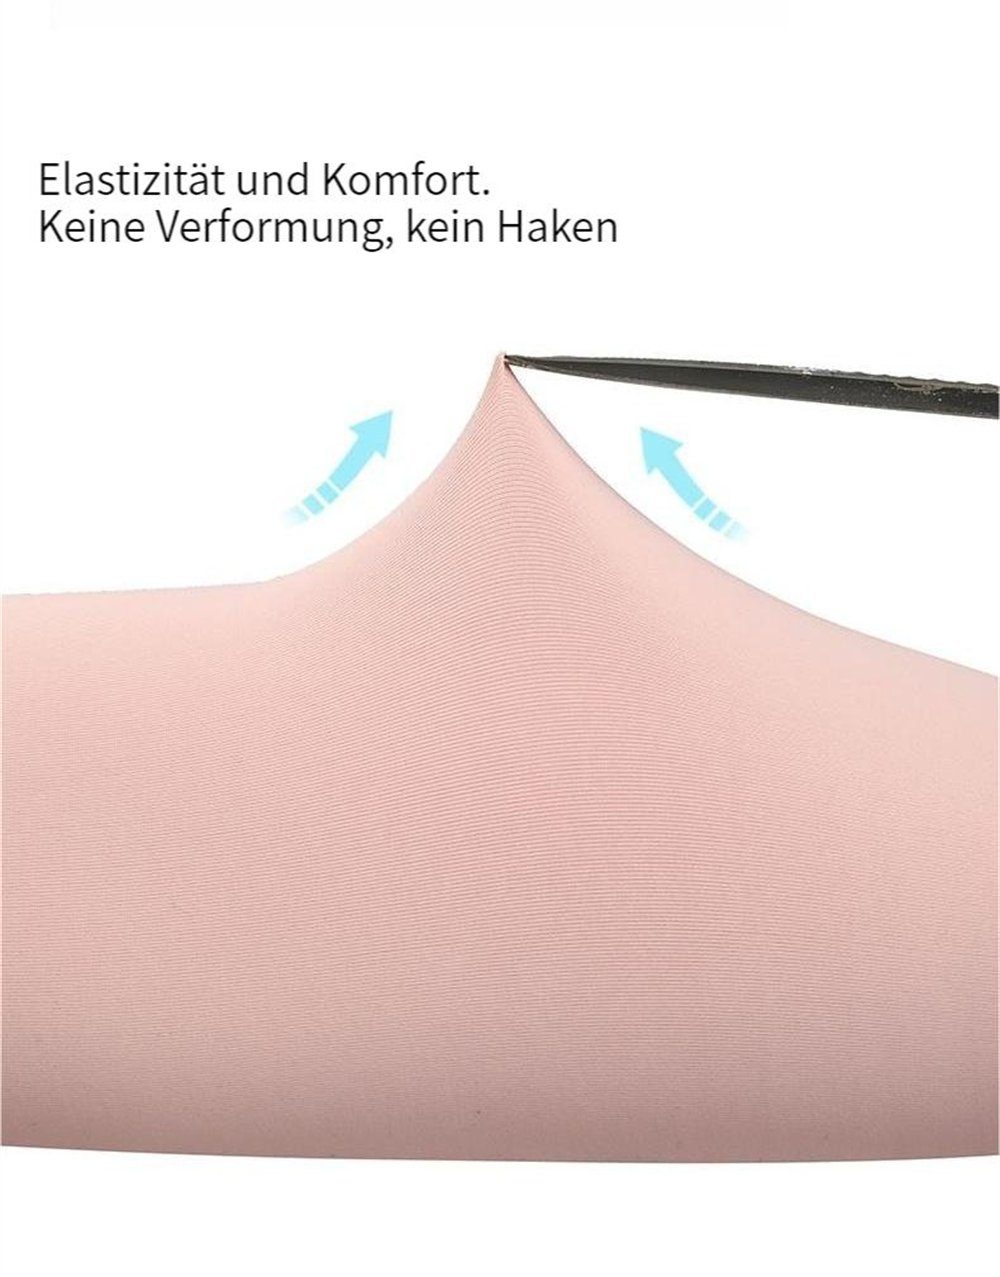 Rouemi Armstulpen Sommer-Sonnenschutz-Kampagne, Arm Kühlung Rosa Cooling Ärmel Sleeves